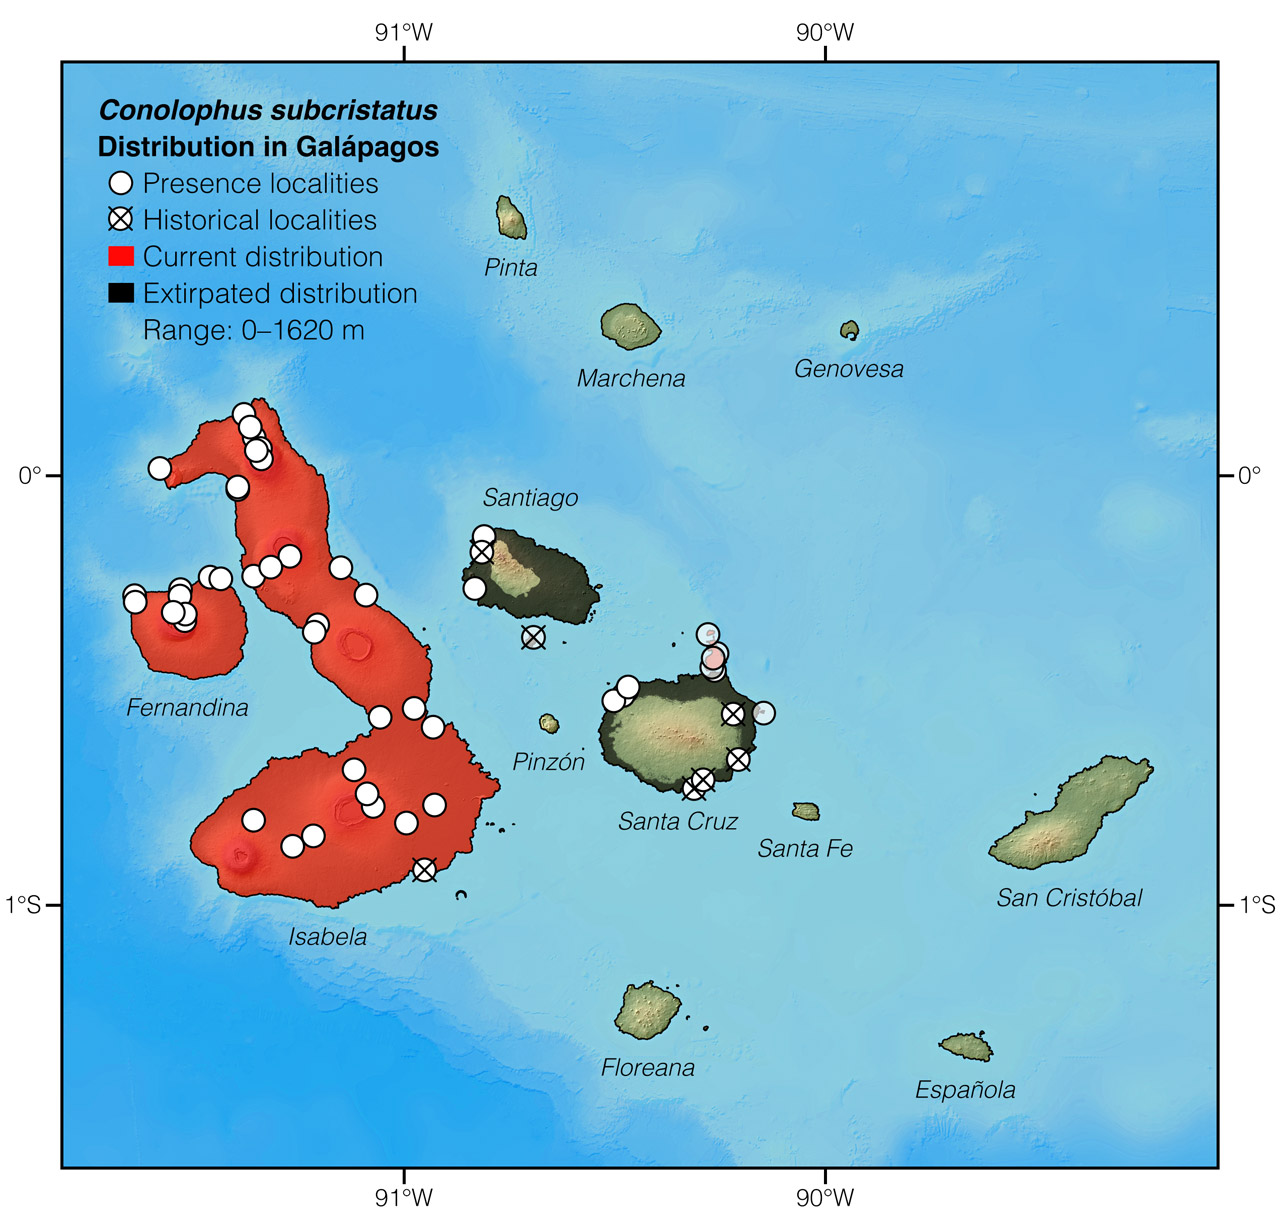 Distribution of Conolophus subcristatus